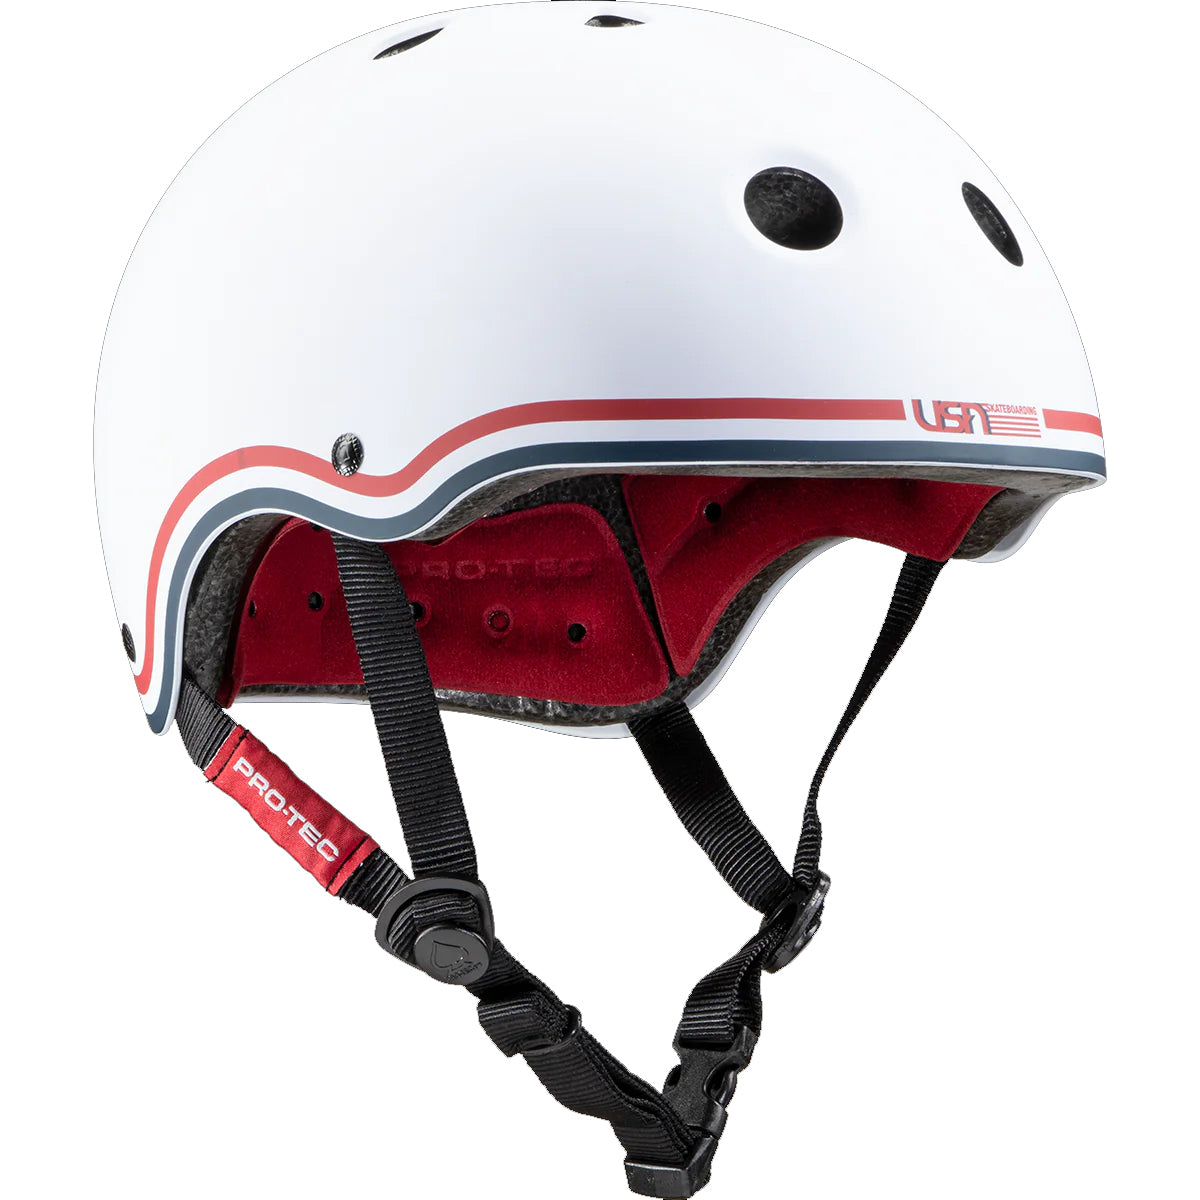 Protec Olympic Team USA Skate Helmet